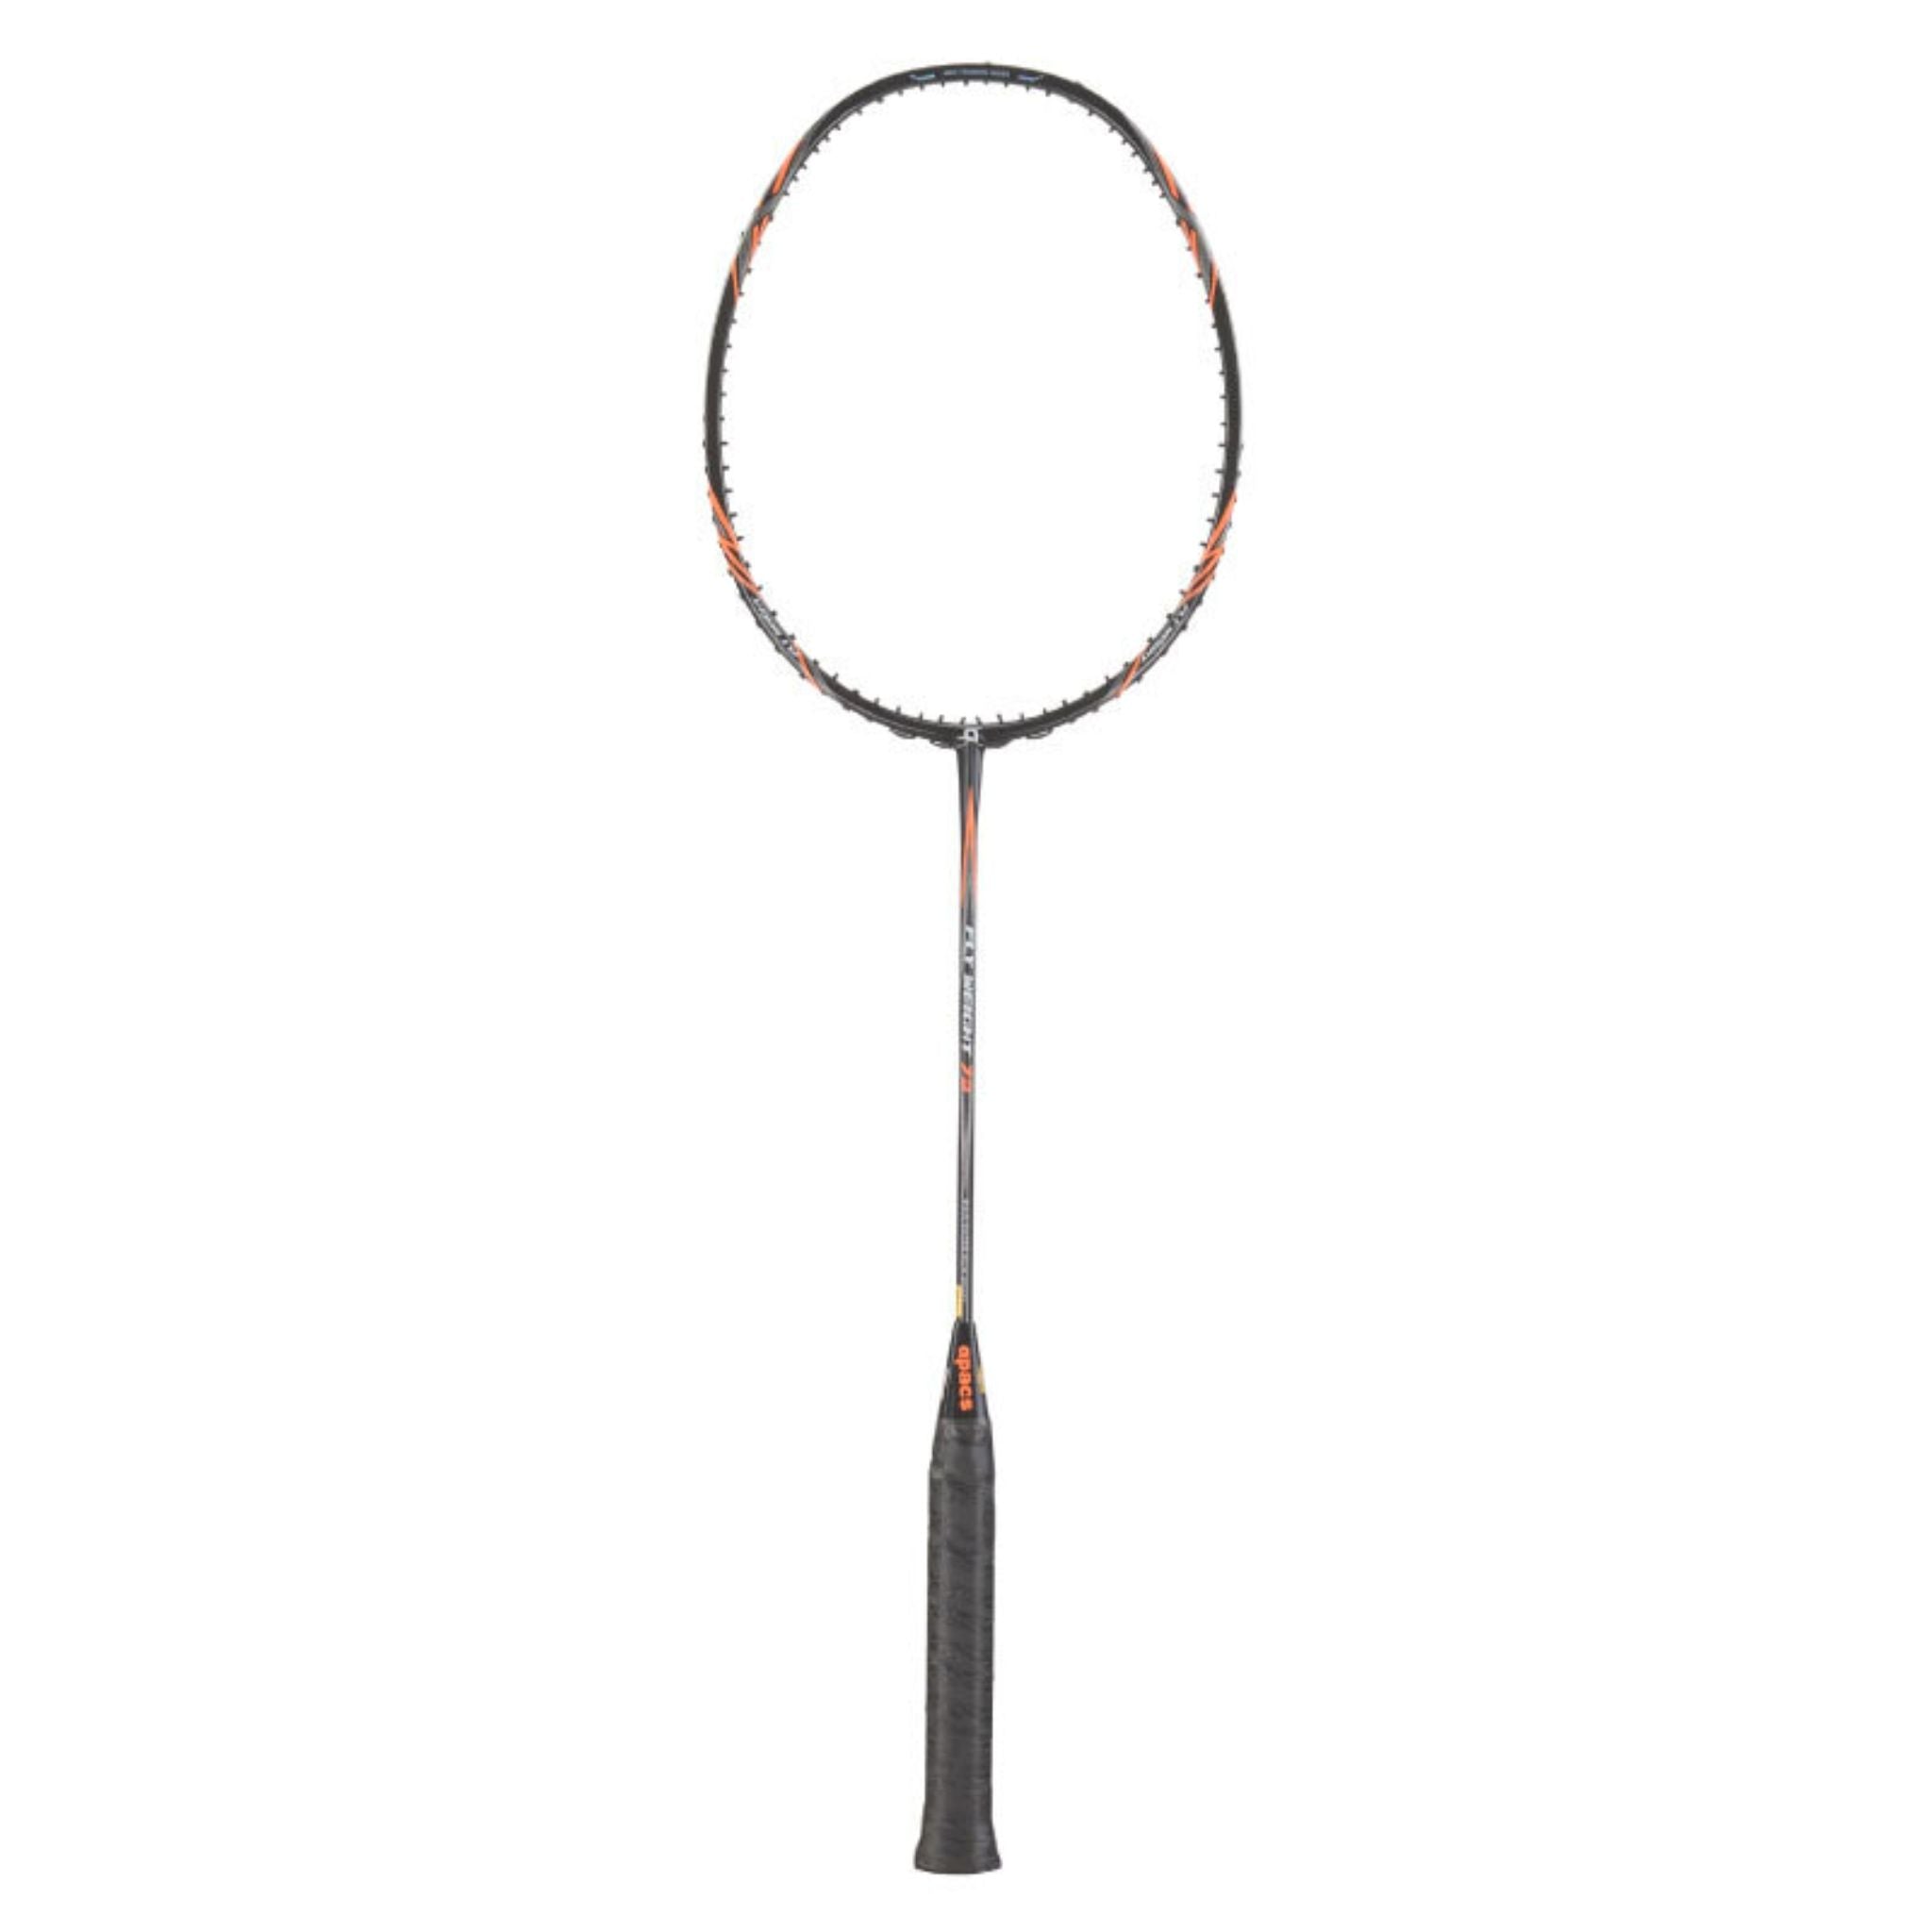 APACS Fly Weight 73 Badminton Racket